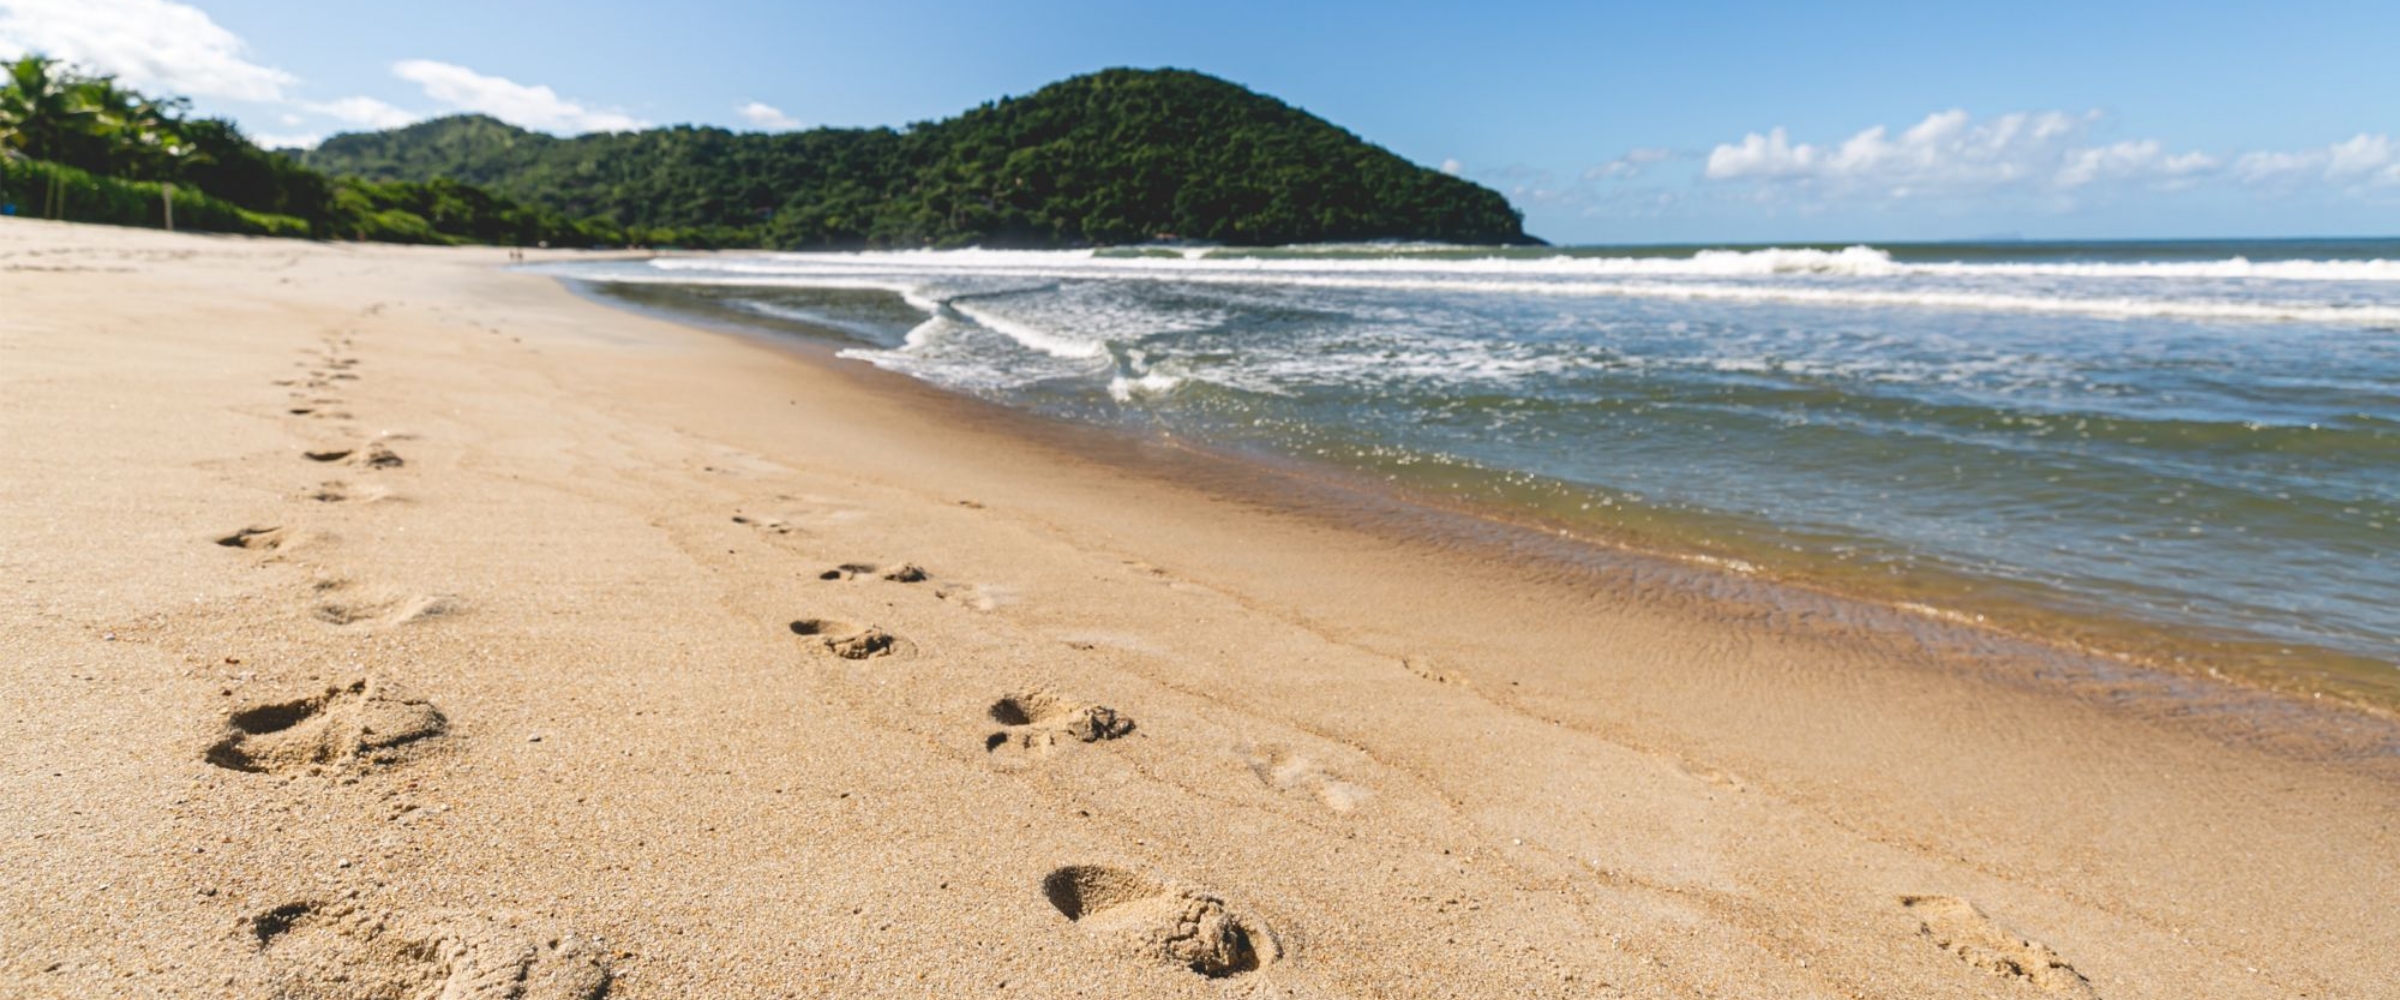 Landscape shot of footprints on a beach